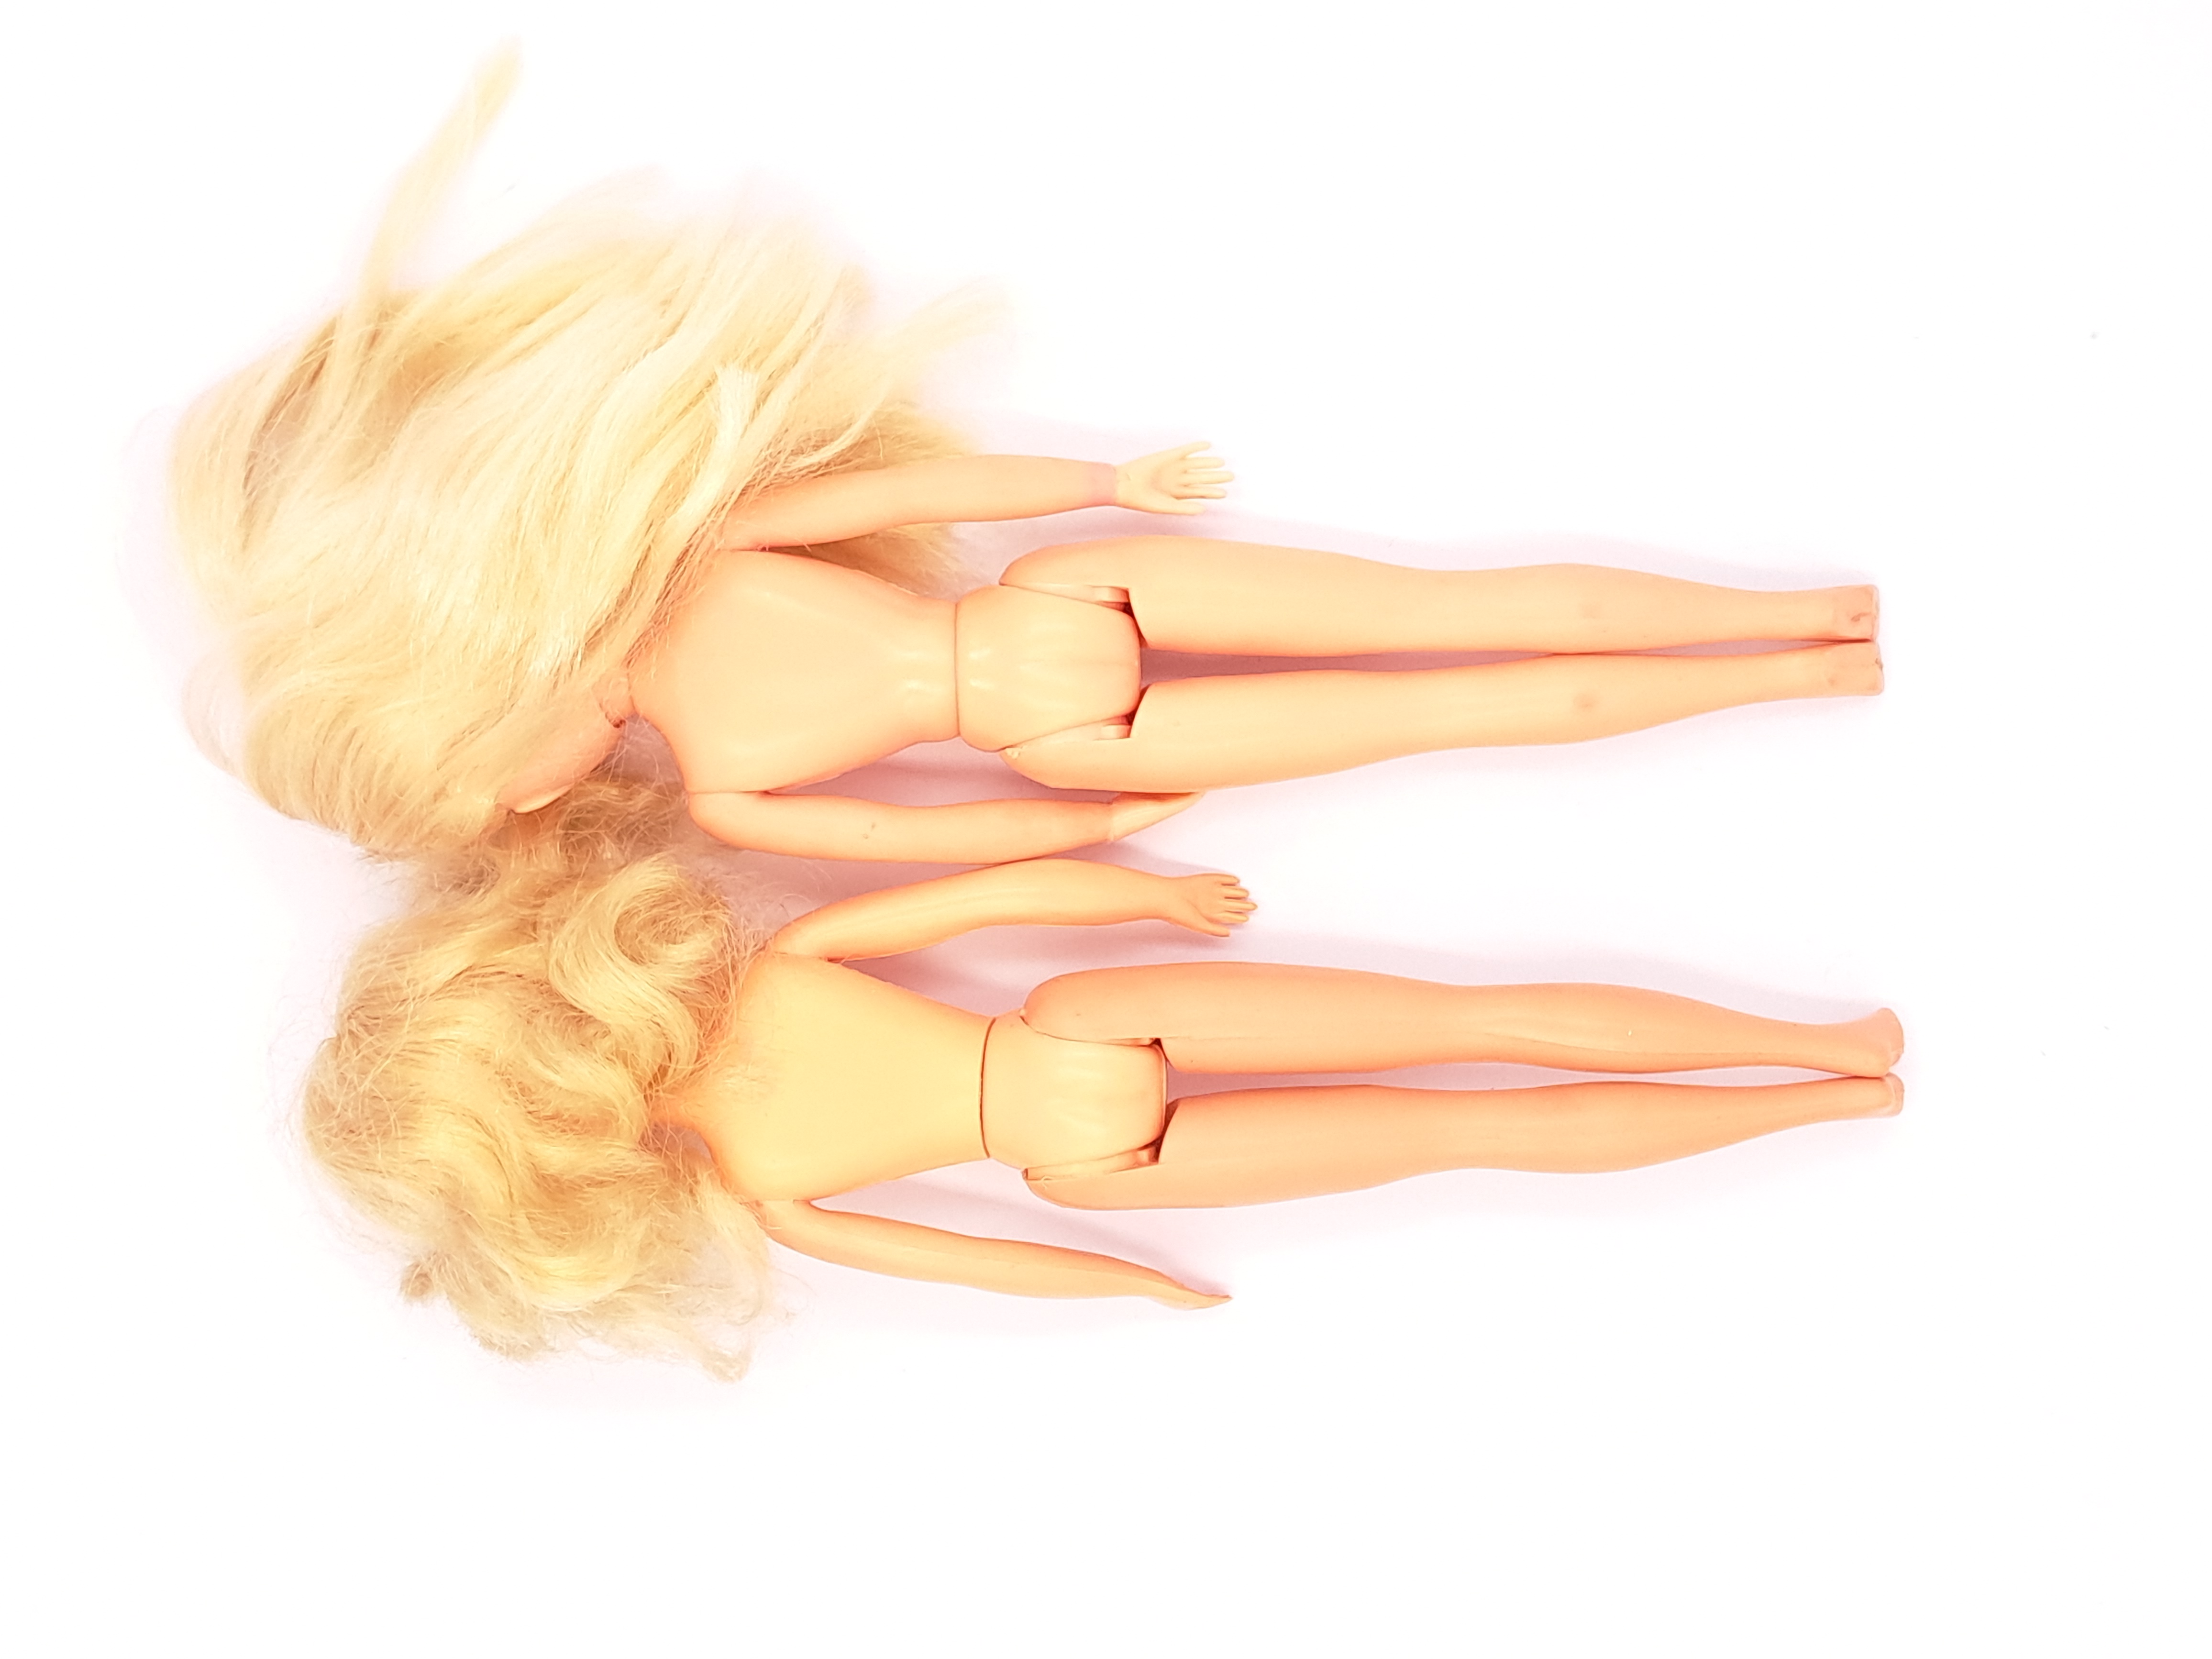 Pedigree Sindy pair of vintage 1980s dolls - Image 4 of 4